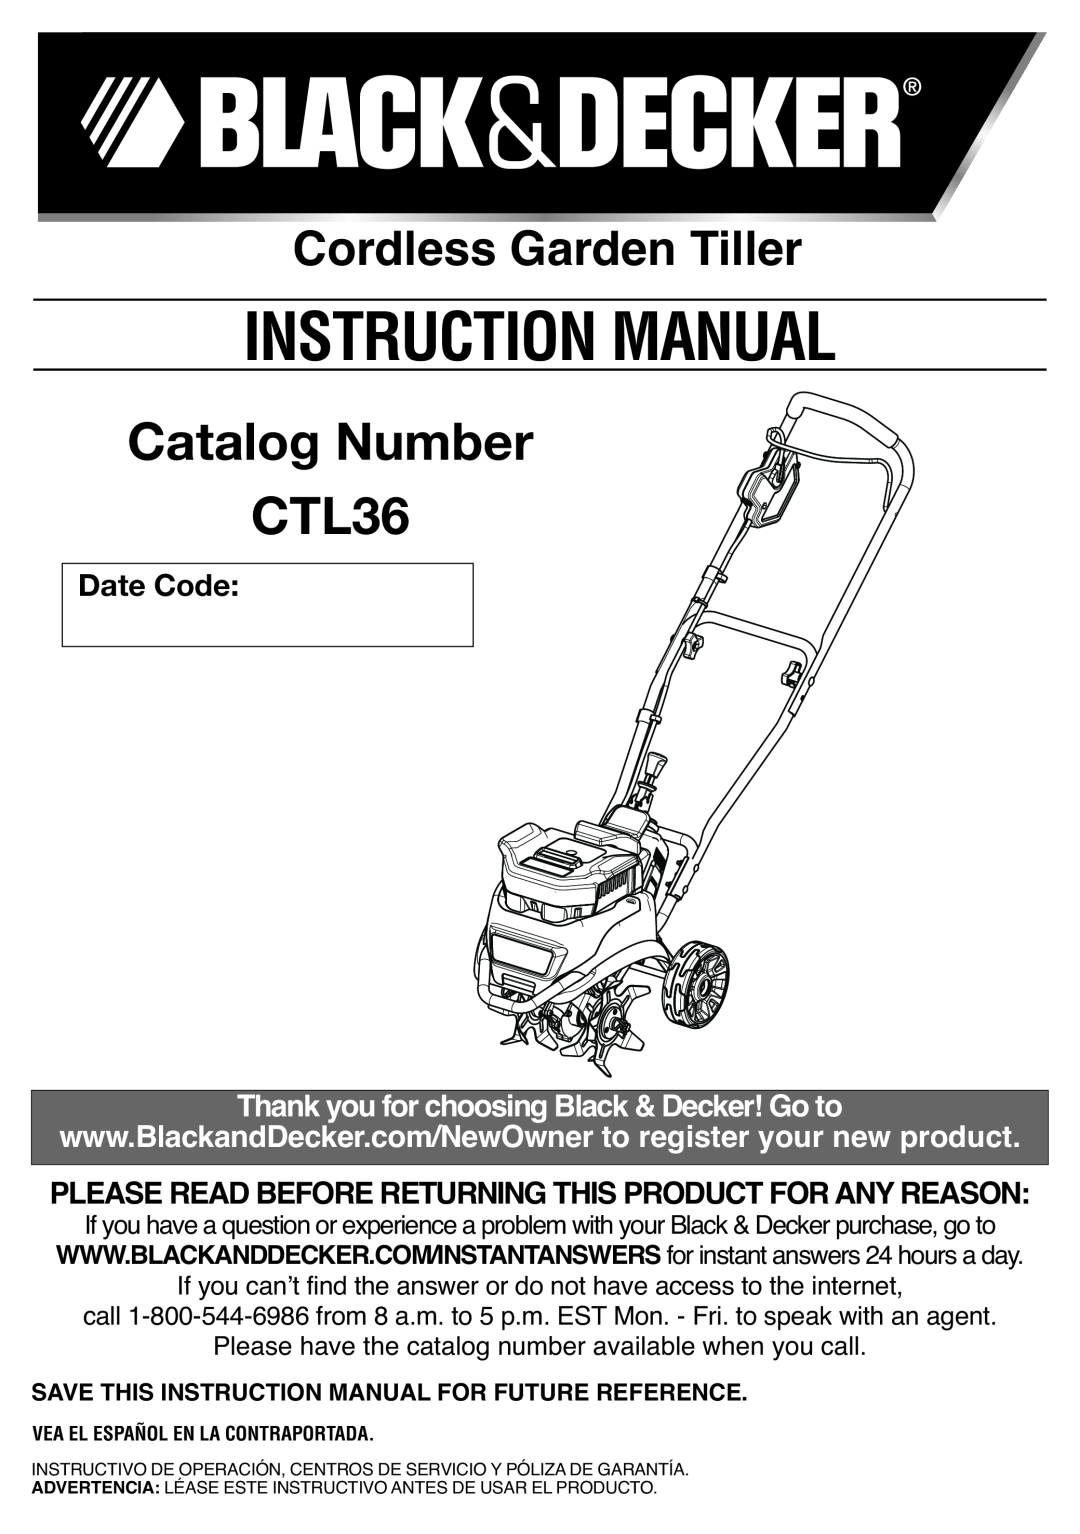 Black & Decker instruction manual Catalog Number CTL36, Cordless Garden Tiller, Instruction Manual, Date Code 